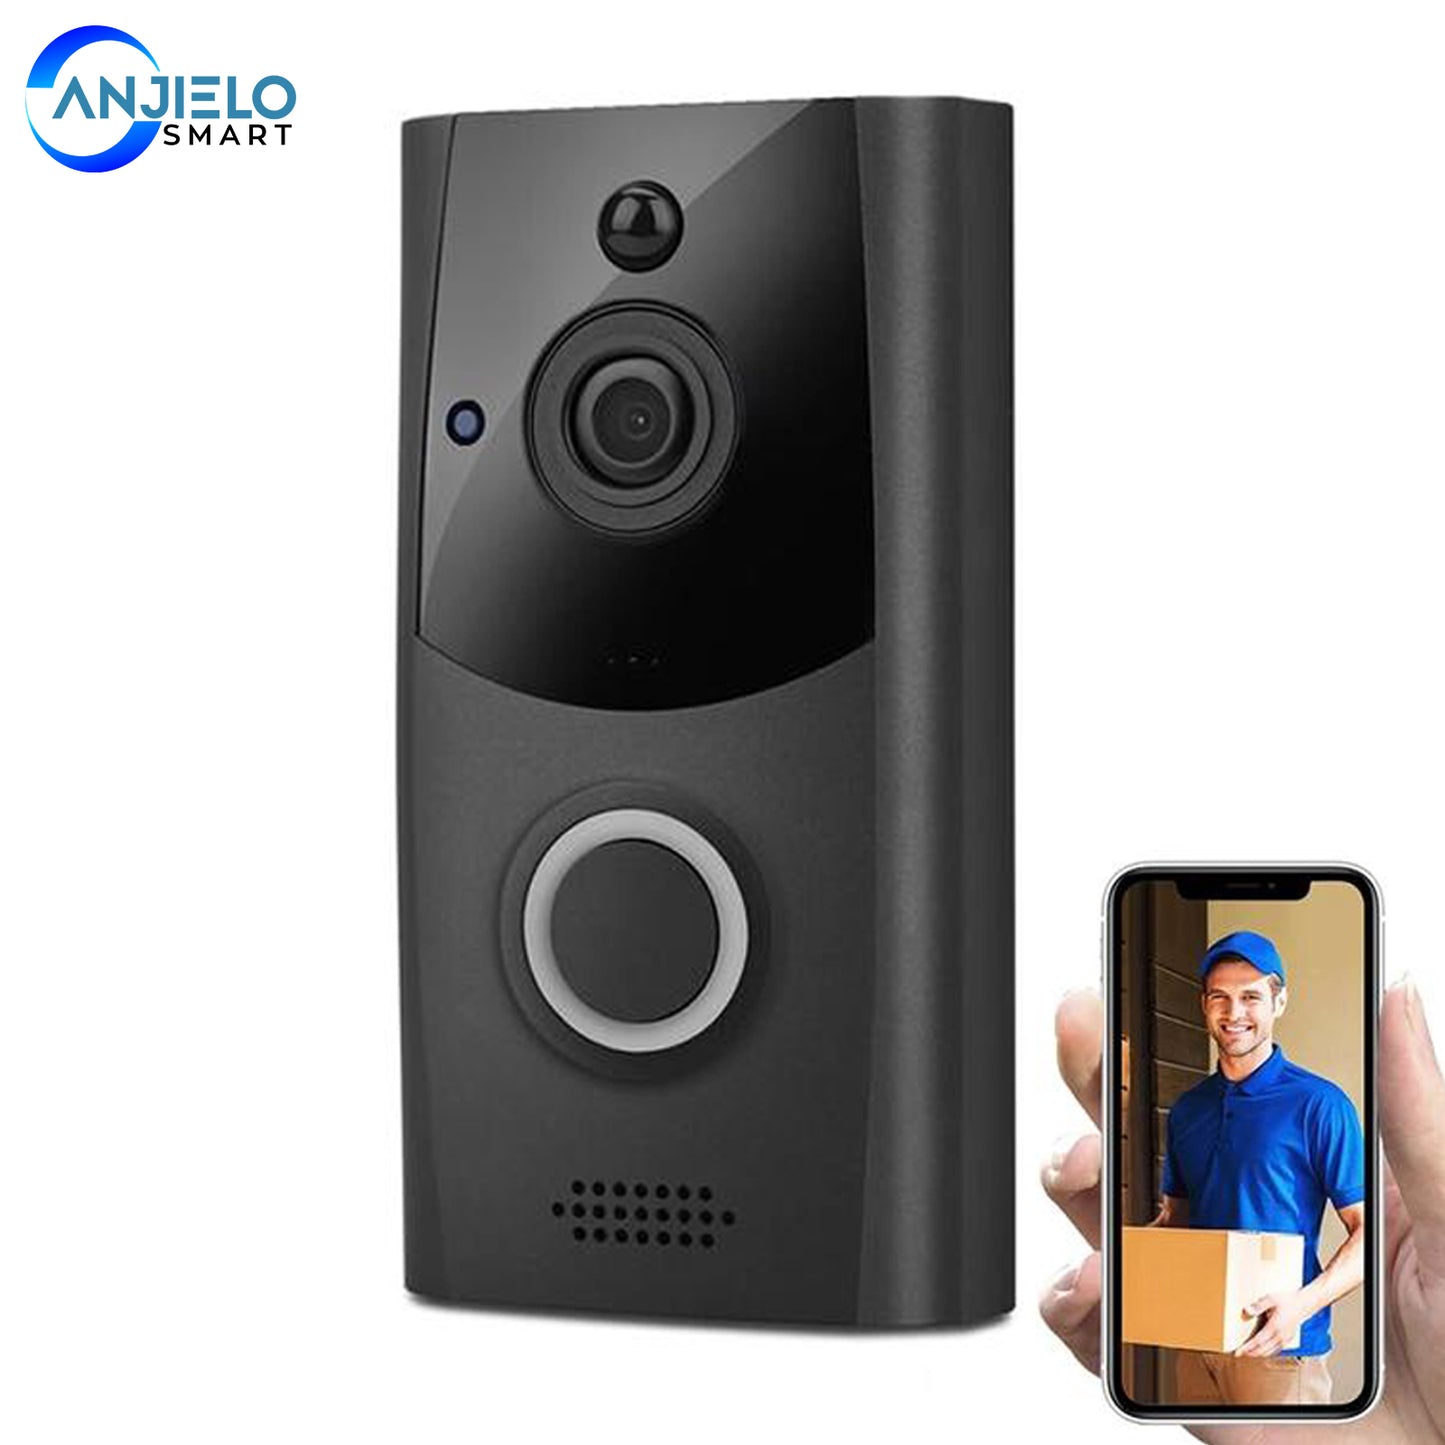 AnjieloSmart WiFi Wireless Video Doorbell Dual-Way Smart PIR Doorbell HD Security Camera High Resolution 720P